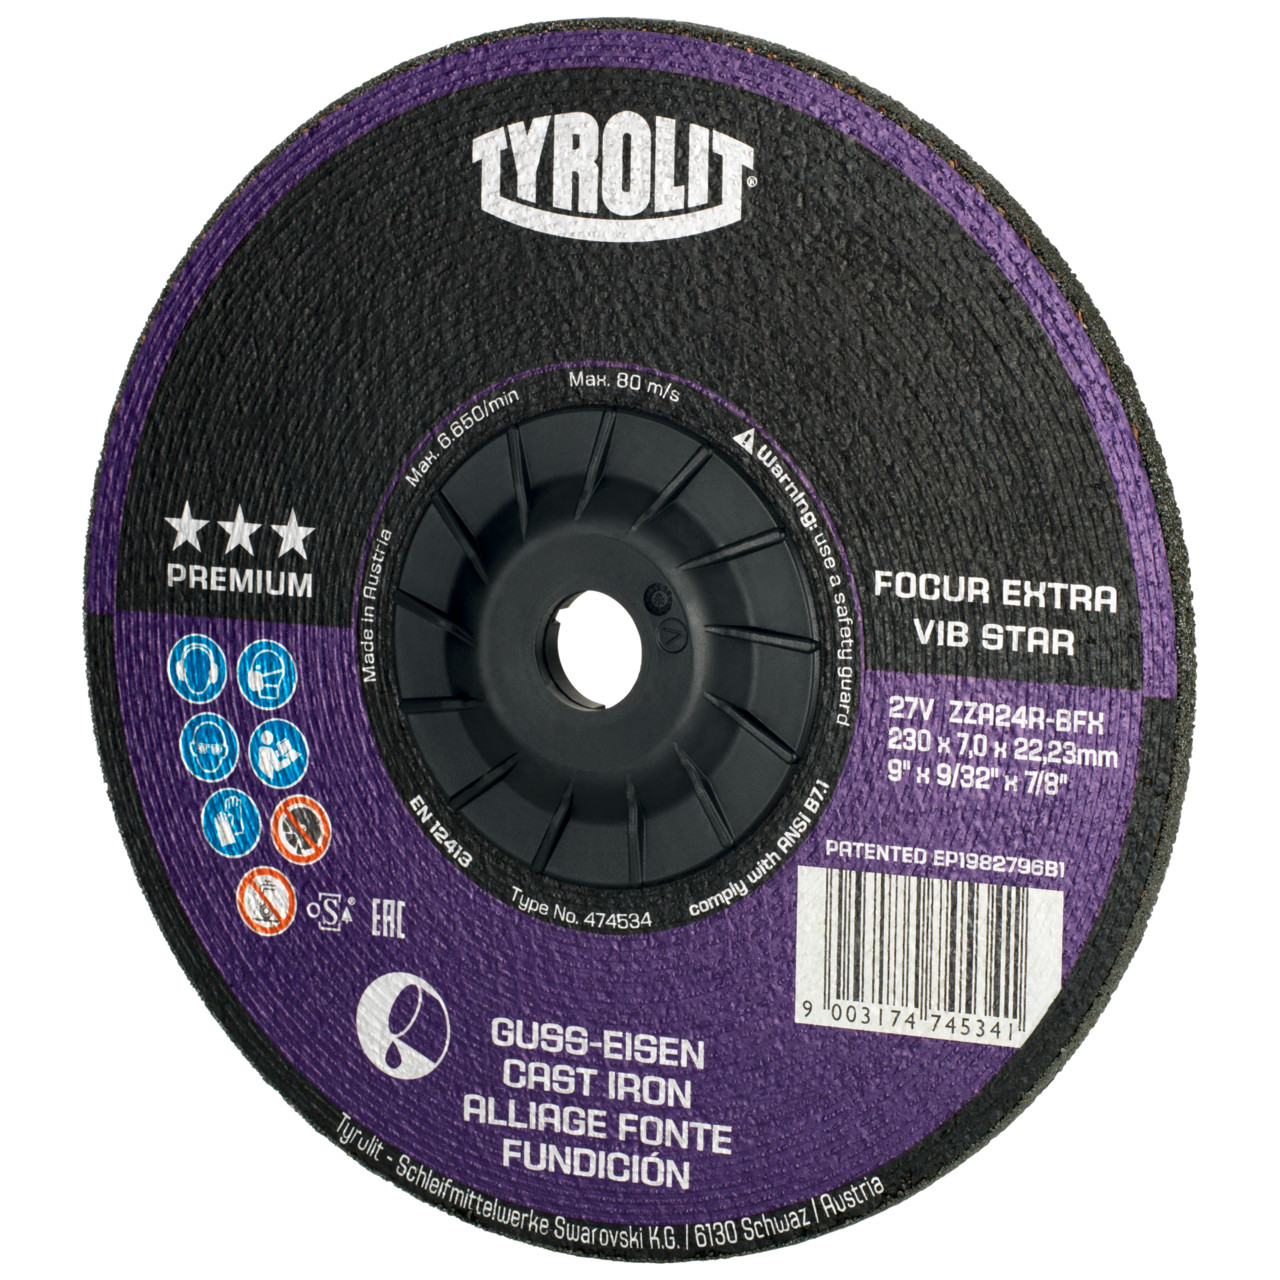 TYROLIT grinding wheel DxUxH 230x7x22.23 FOCUR Extra Vibstar for cast iron, shape: 27 - offset version, Art. 474533